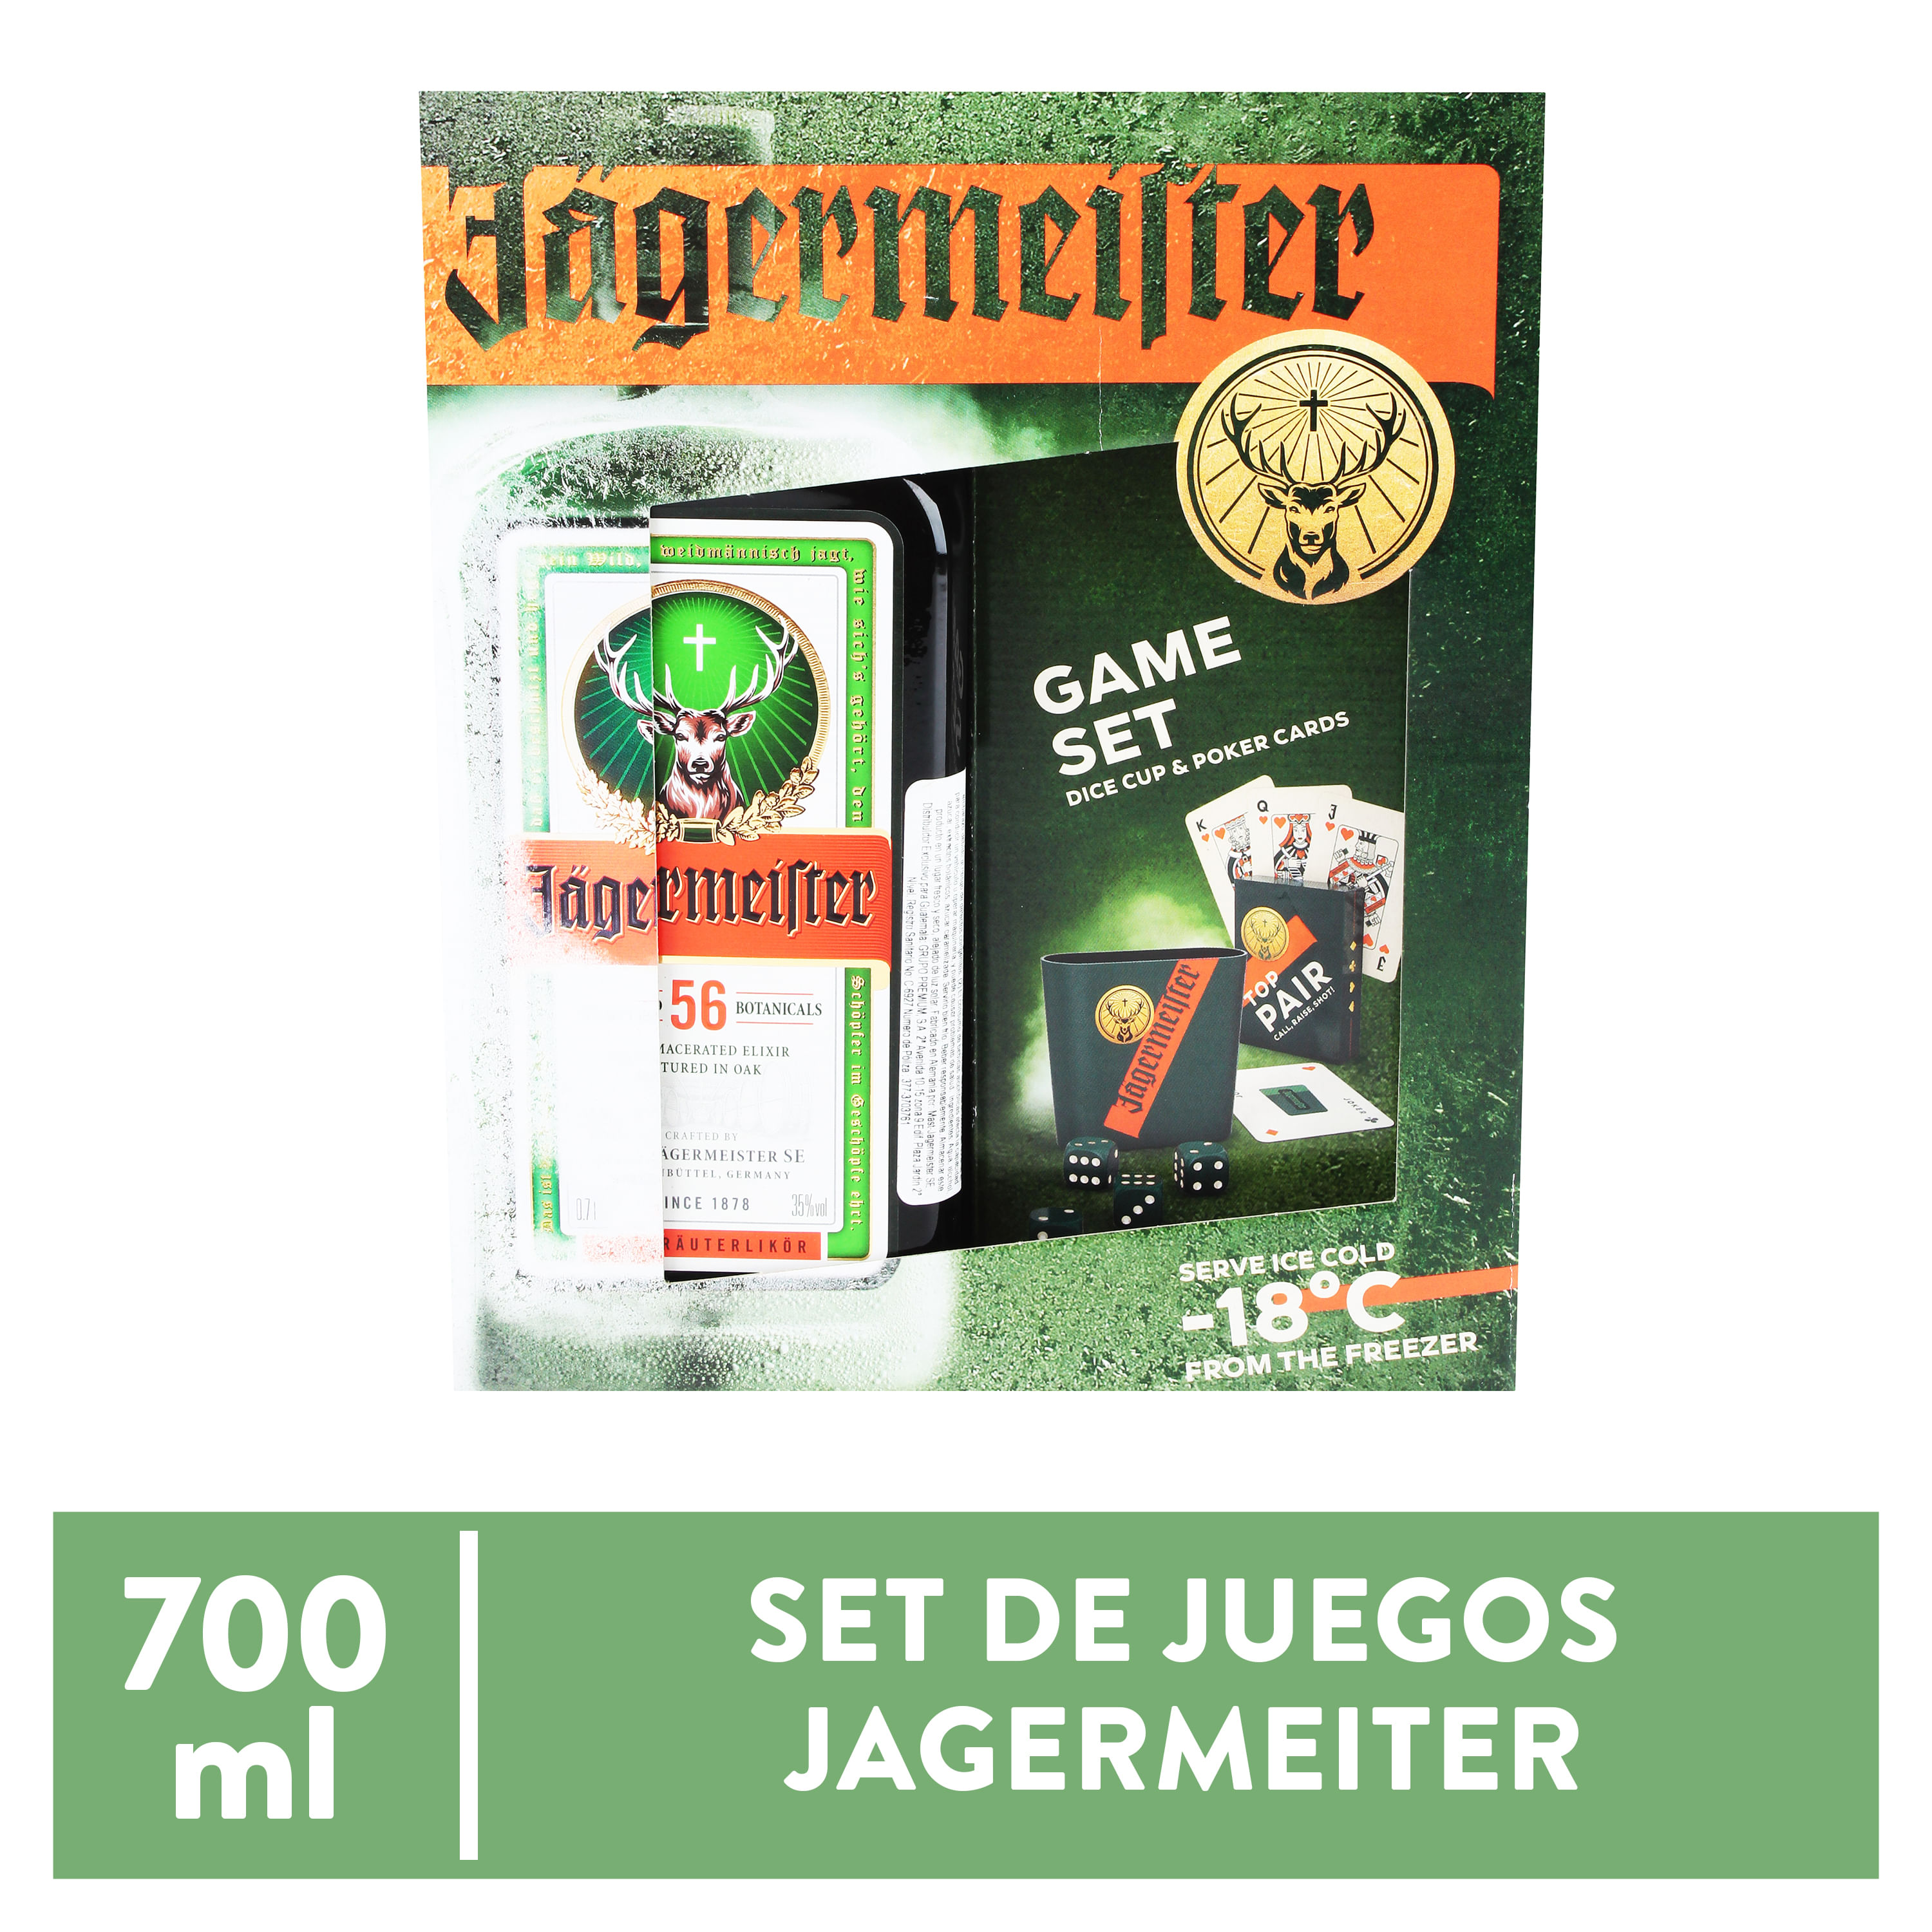 Comprar Licor Jagermeister 2 Botellas + 6 Chupitos Online - Envío Gratis